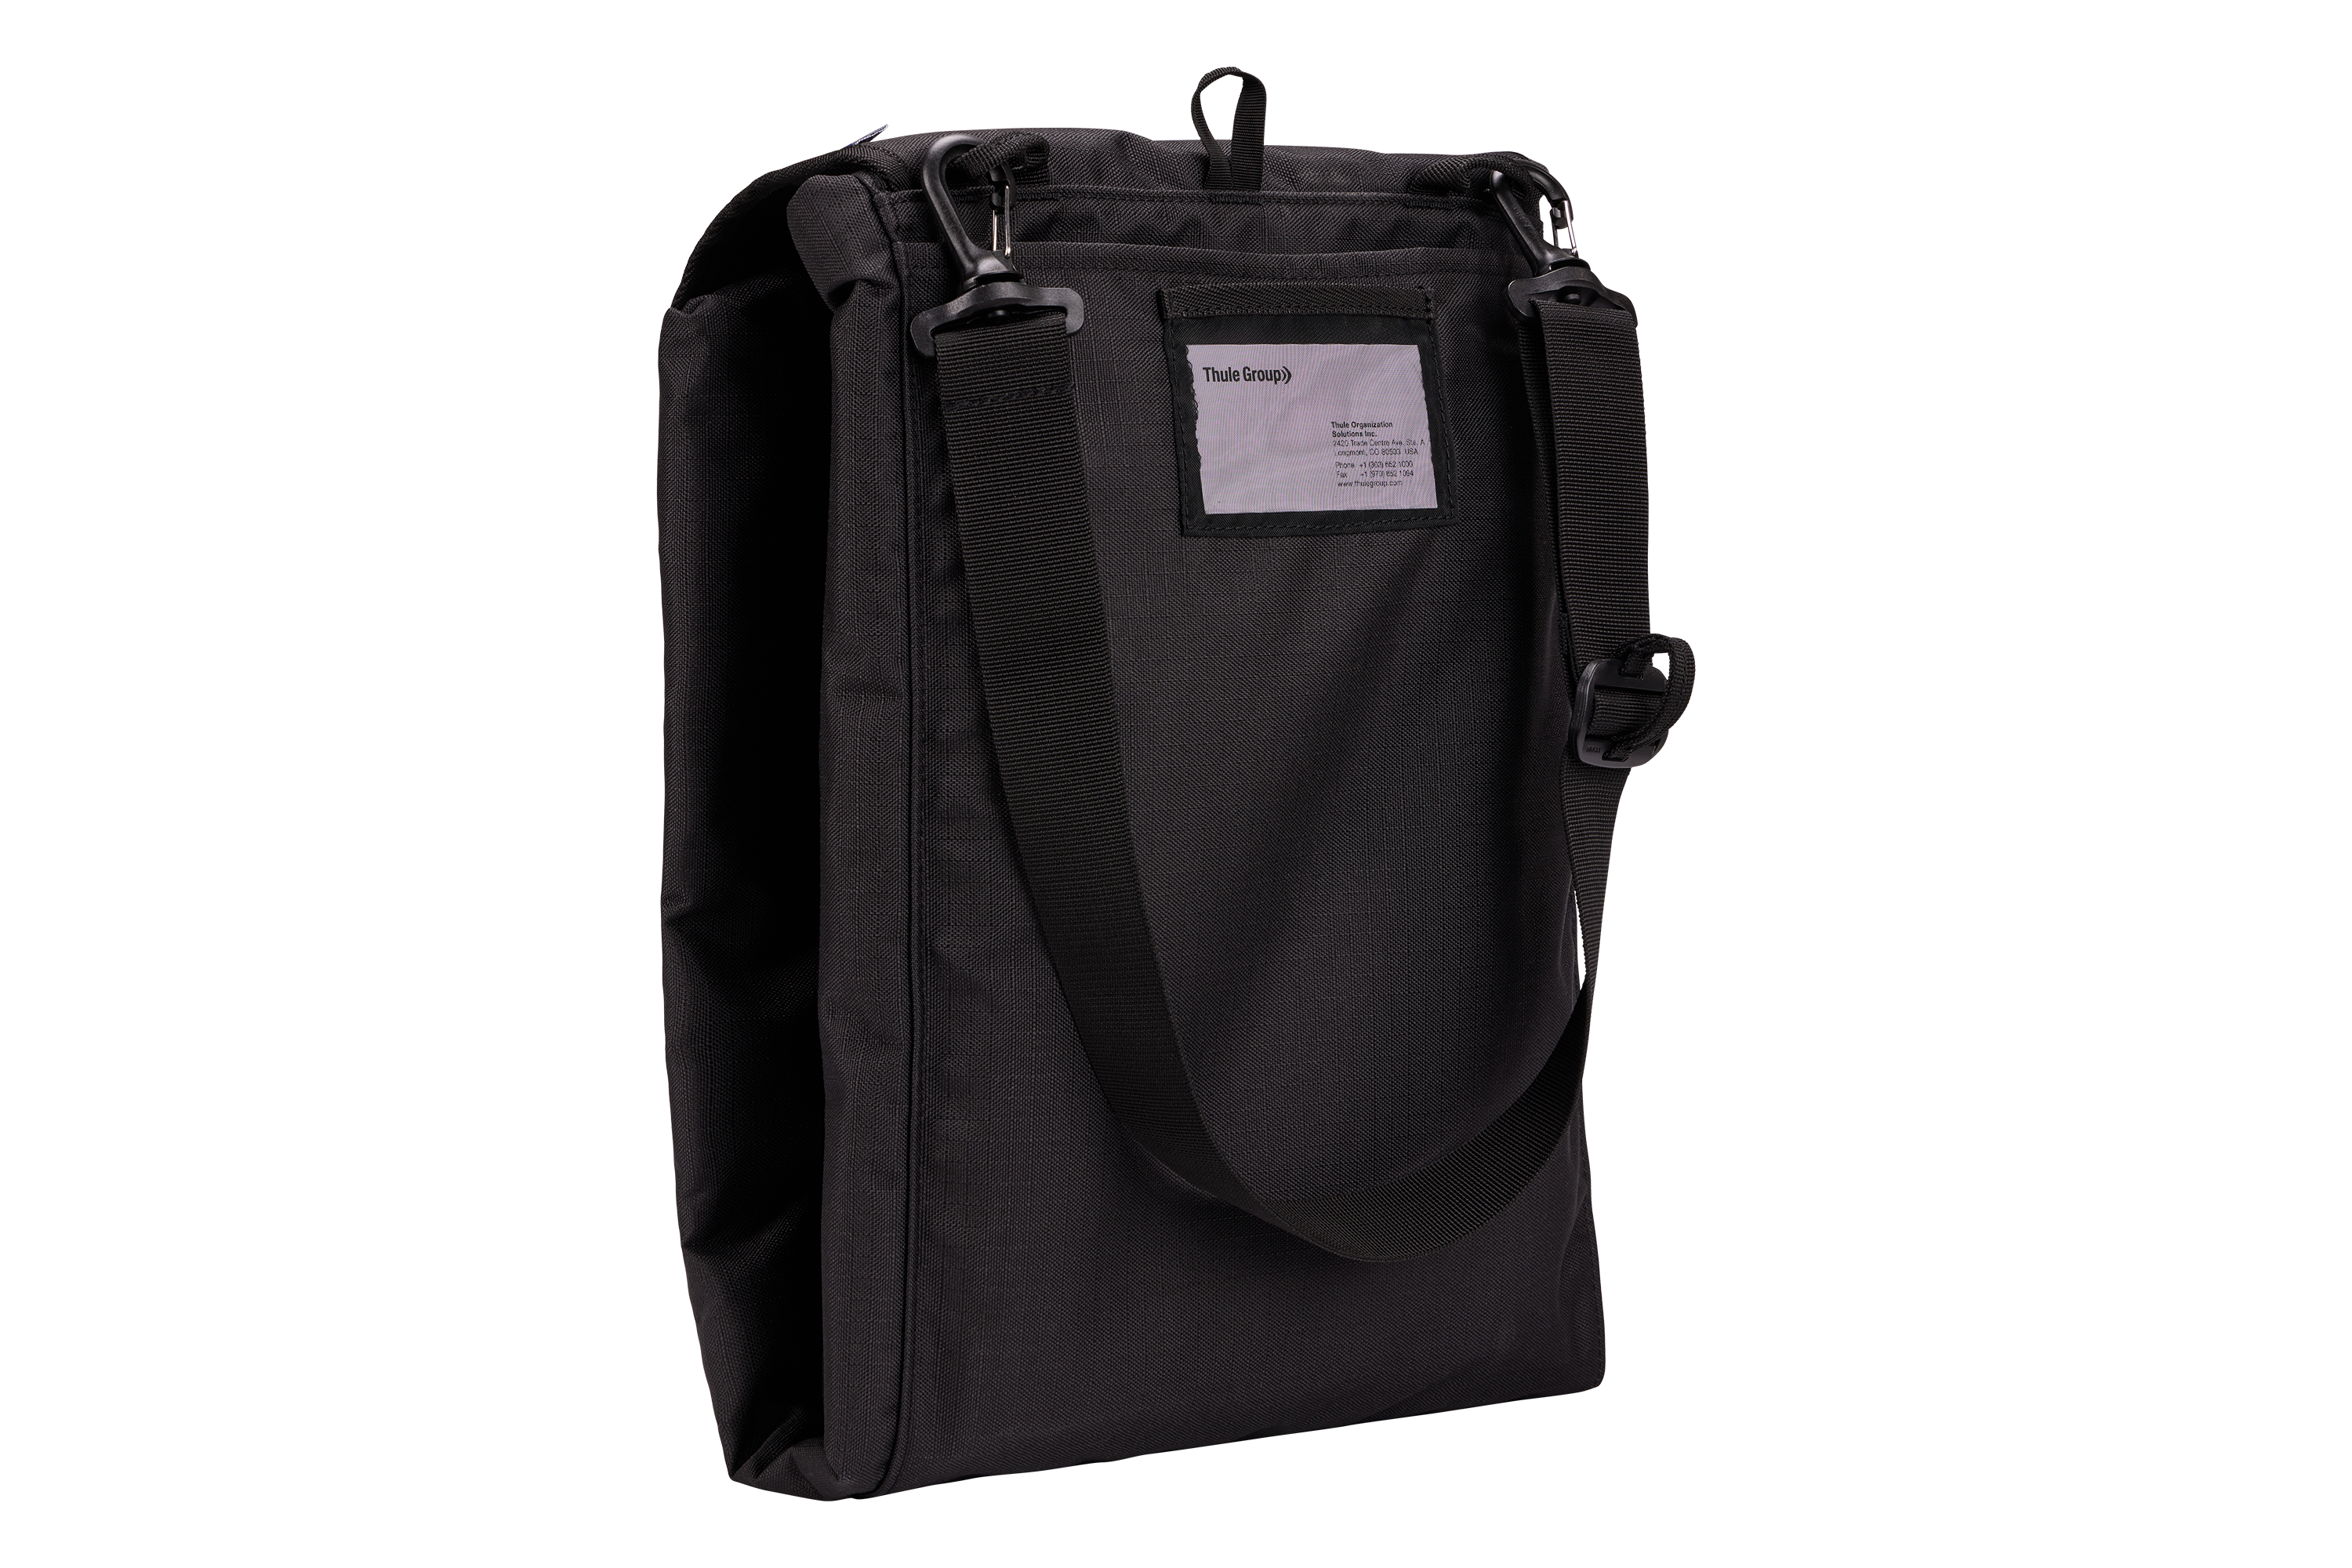 Thule stroller travel bag large saves space